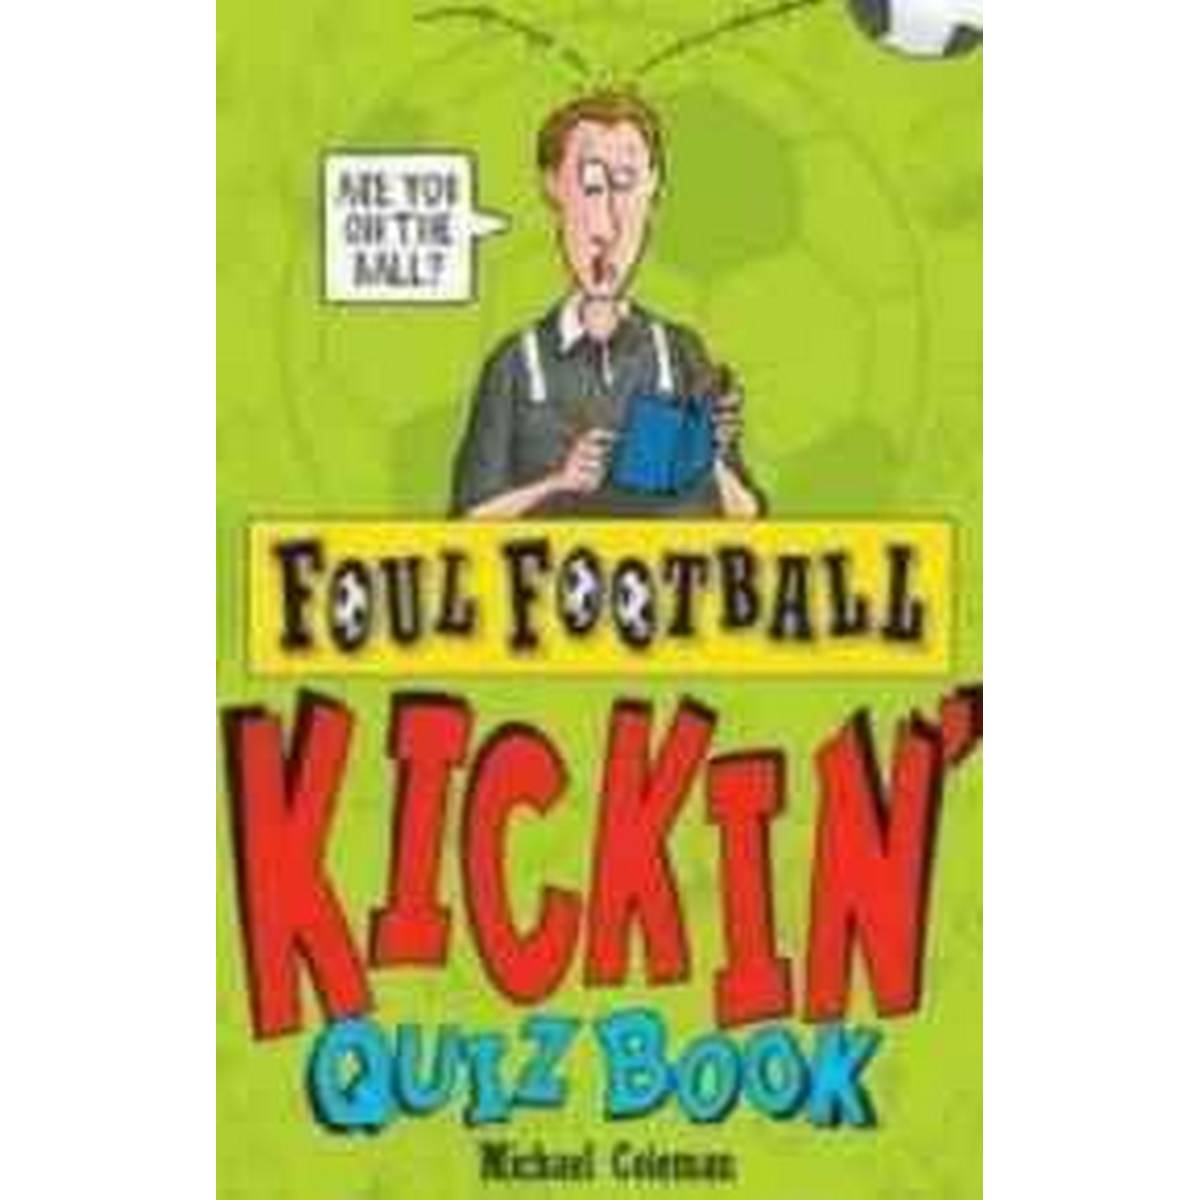 Kickin' Quiz Book (Foul Football)